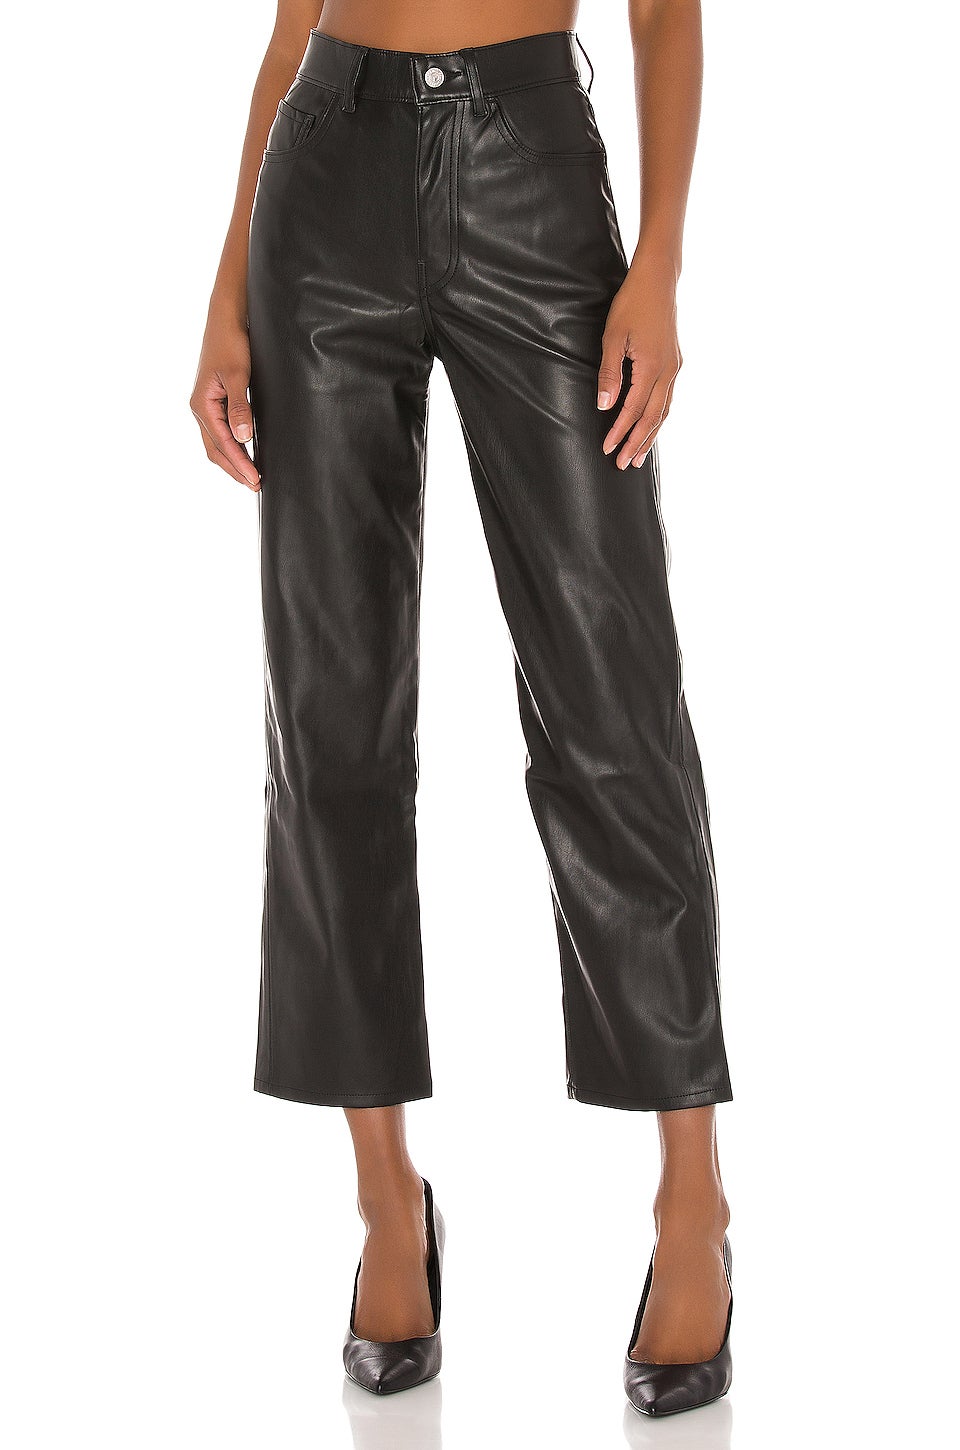 Review: Aritzia Melina Leather Pants Trending On TikTok